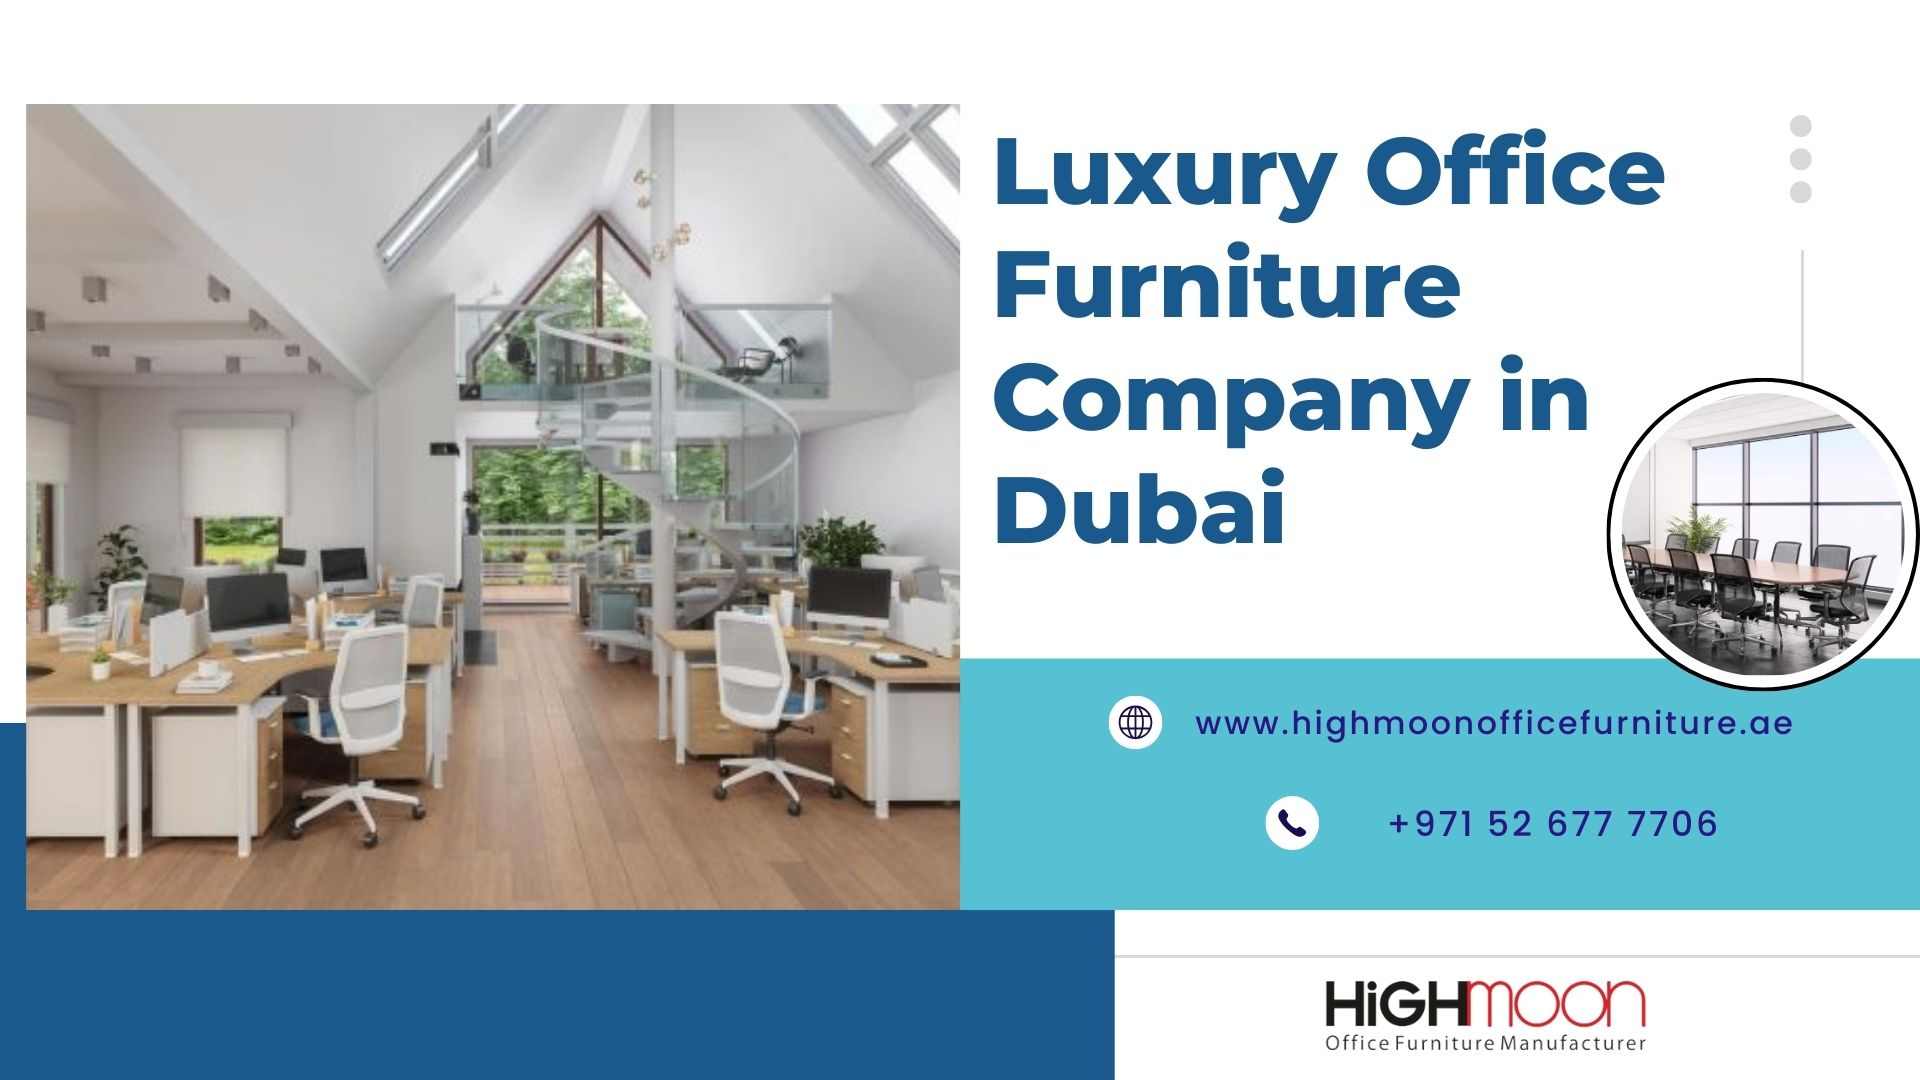 Luxury Office Furniture Company in Dubai